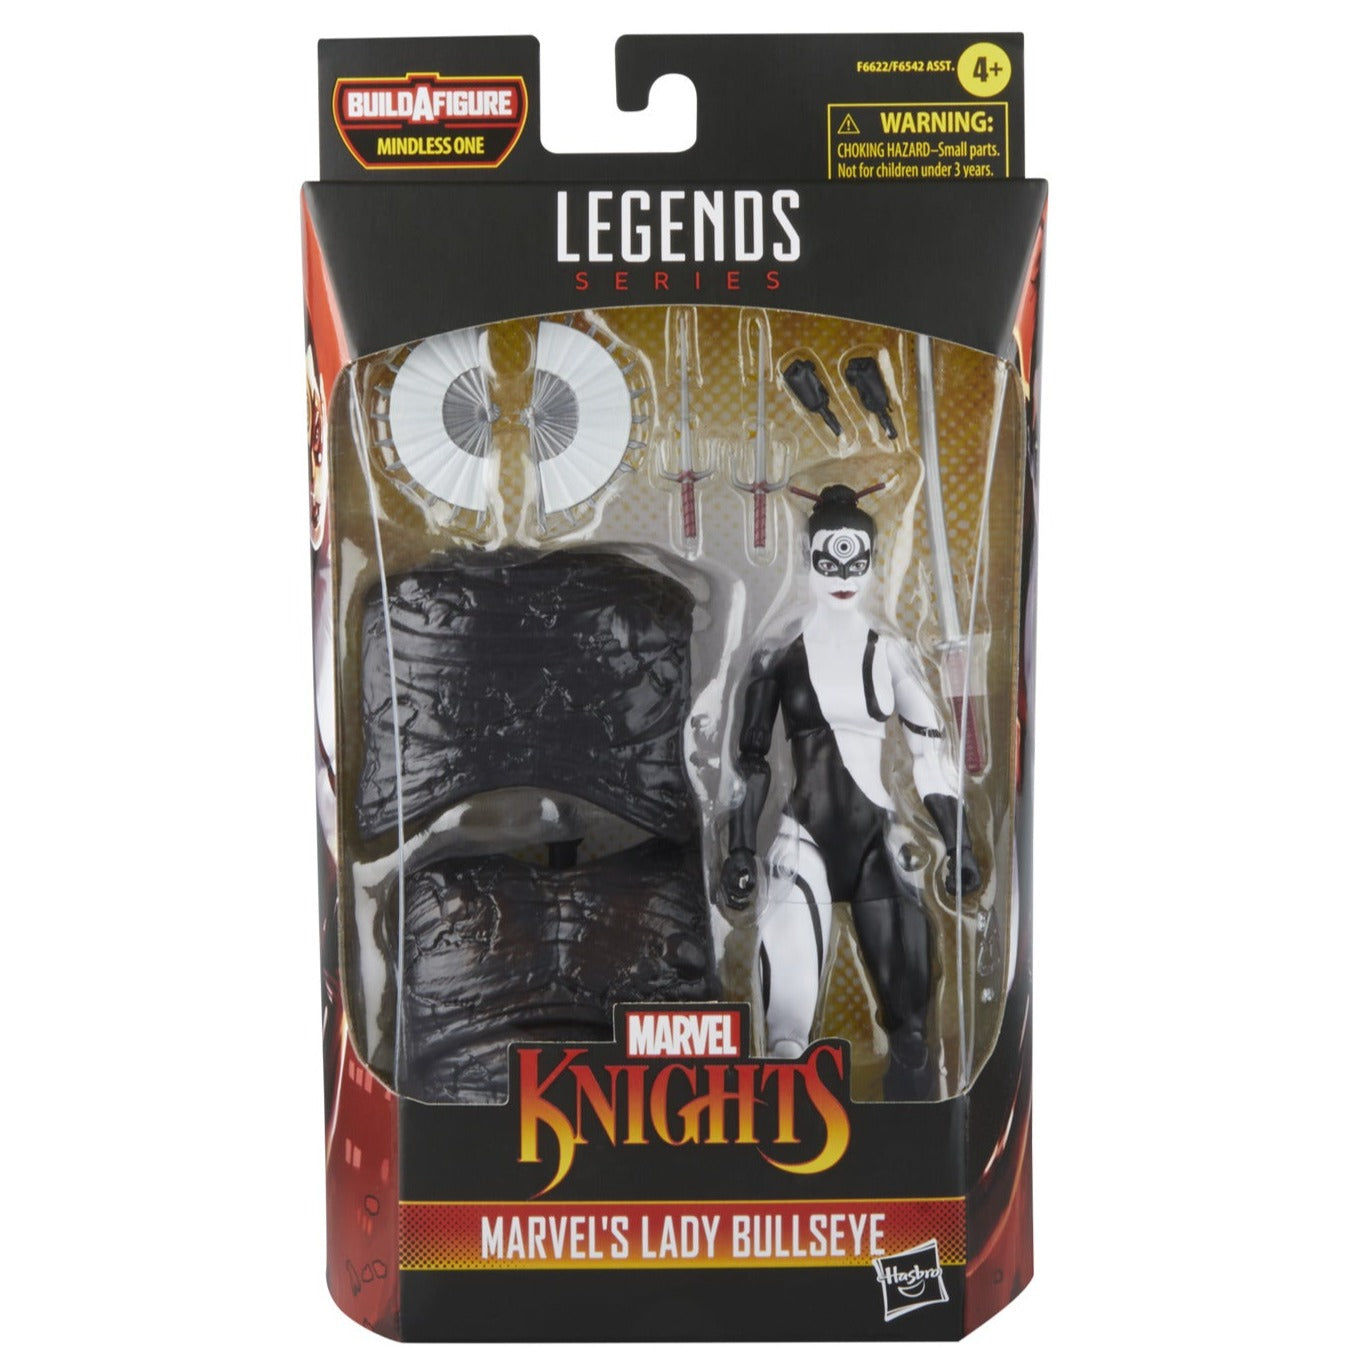 Marvel Knights Legends - Lady Bullseye - 6 inch Action Figure